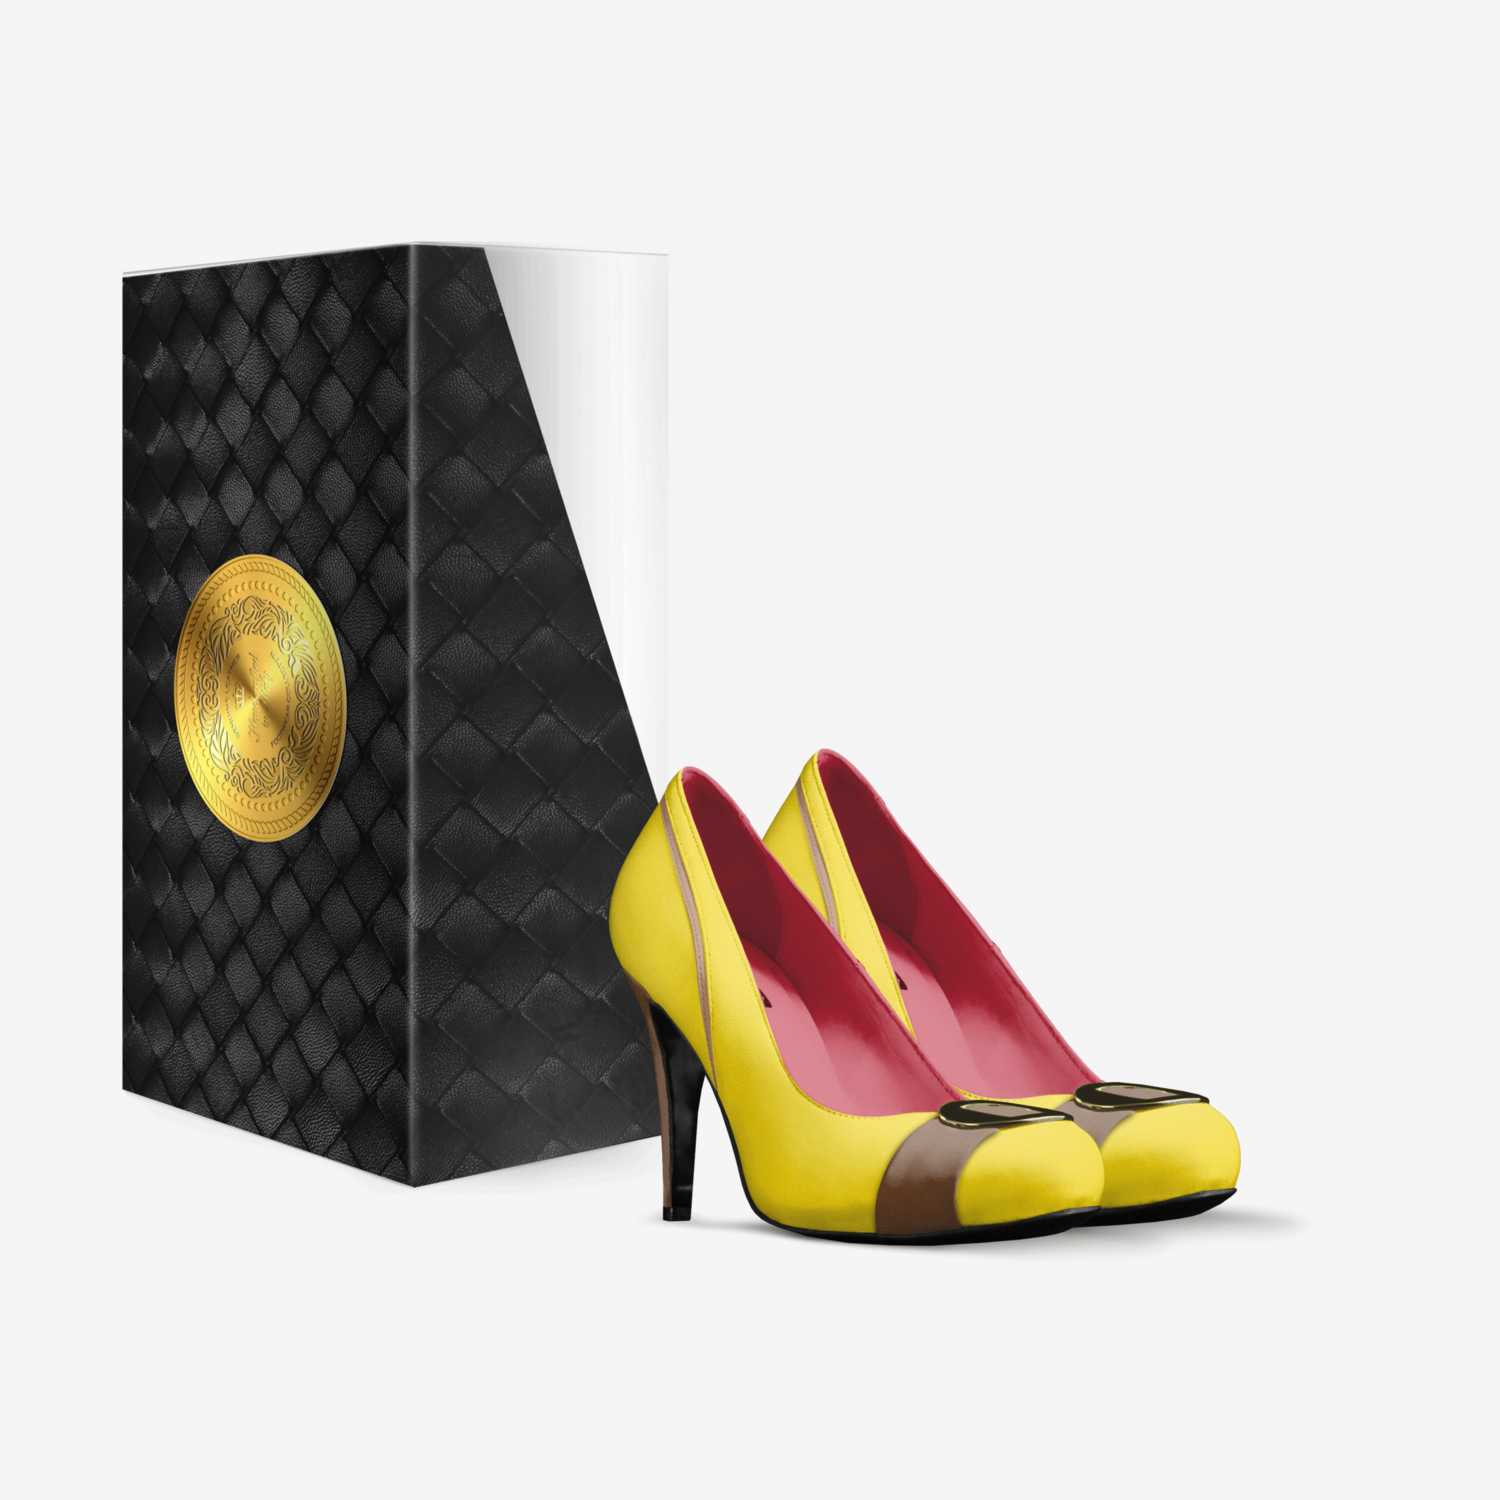 K.Edwards custom made in Italy shoes by Karonda Edwards | Box view